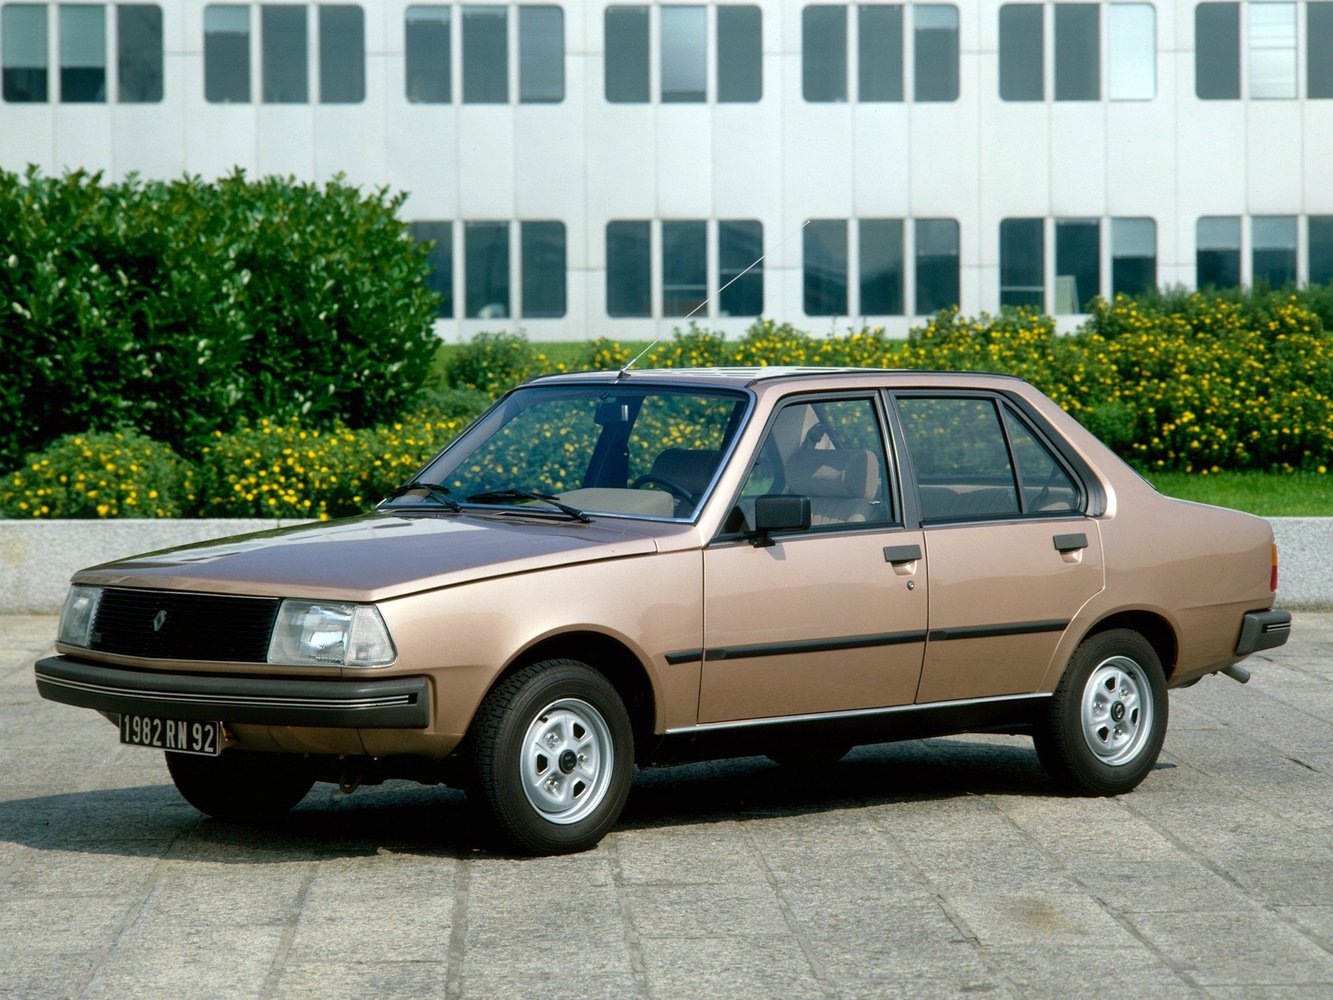 седан Renault 18 1978 - 1986г выпуска модификация 1.4 AT (64 л.с.)